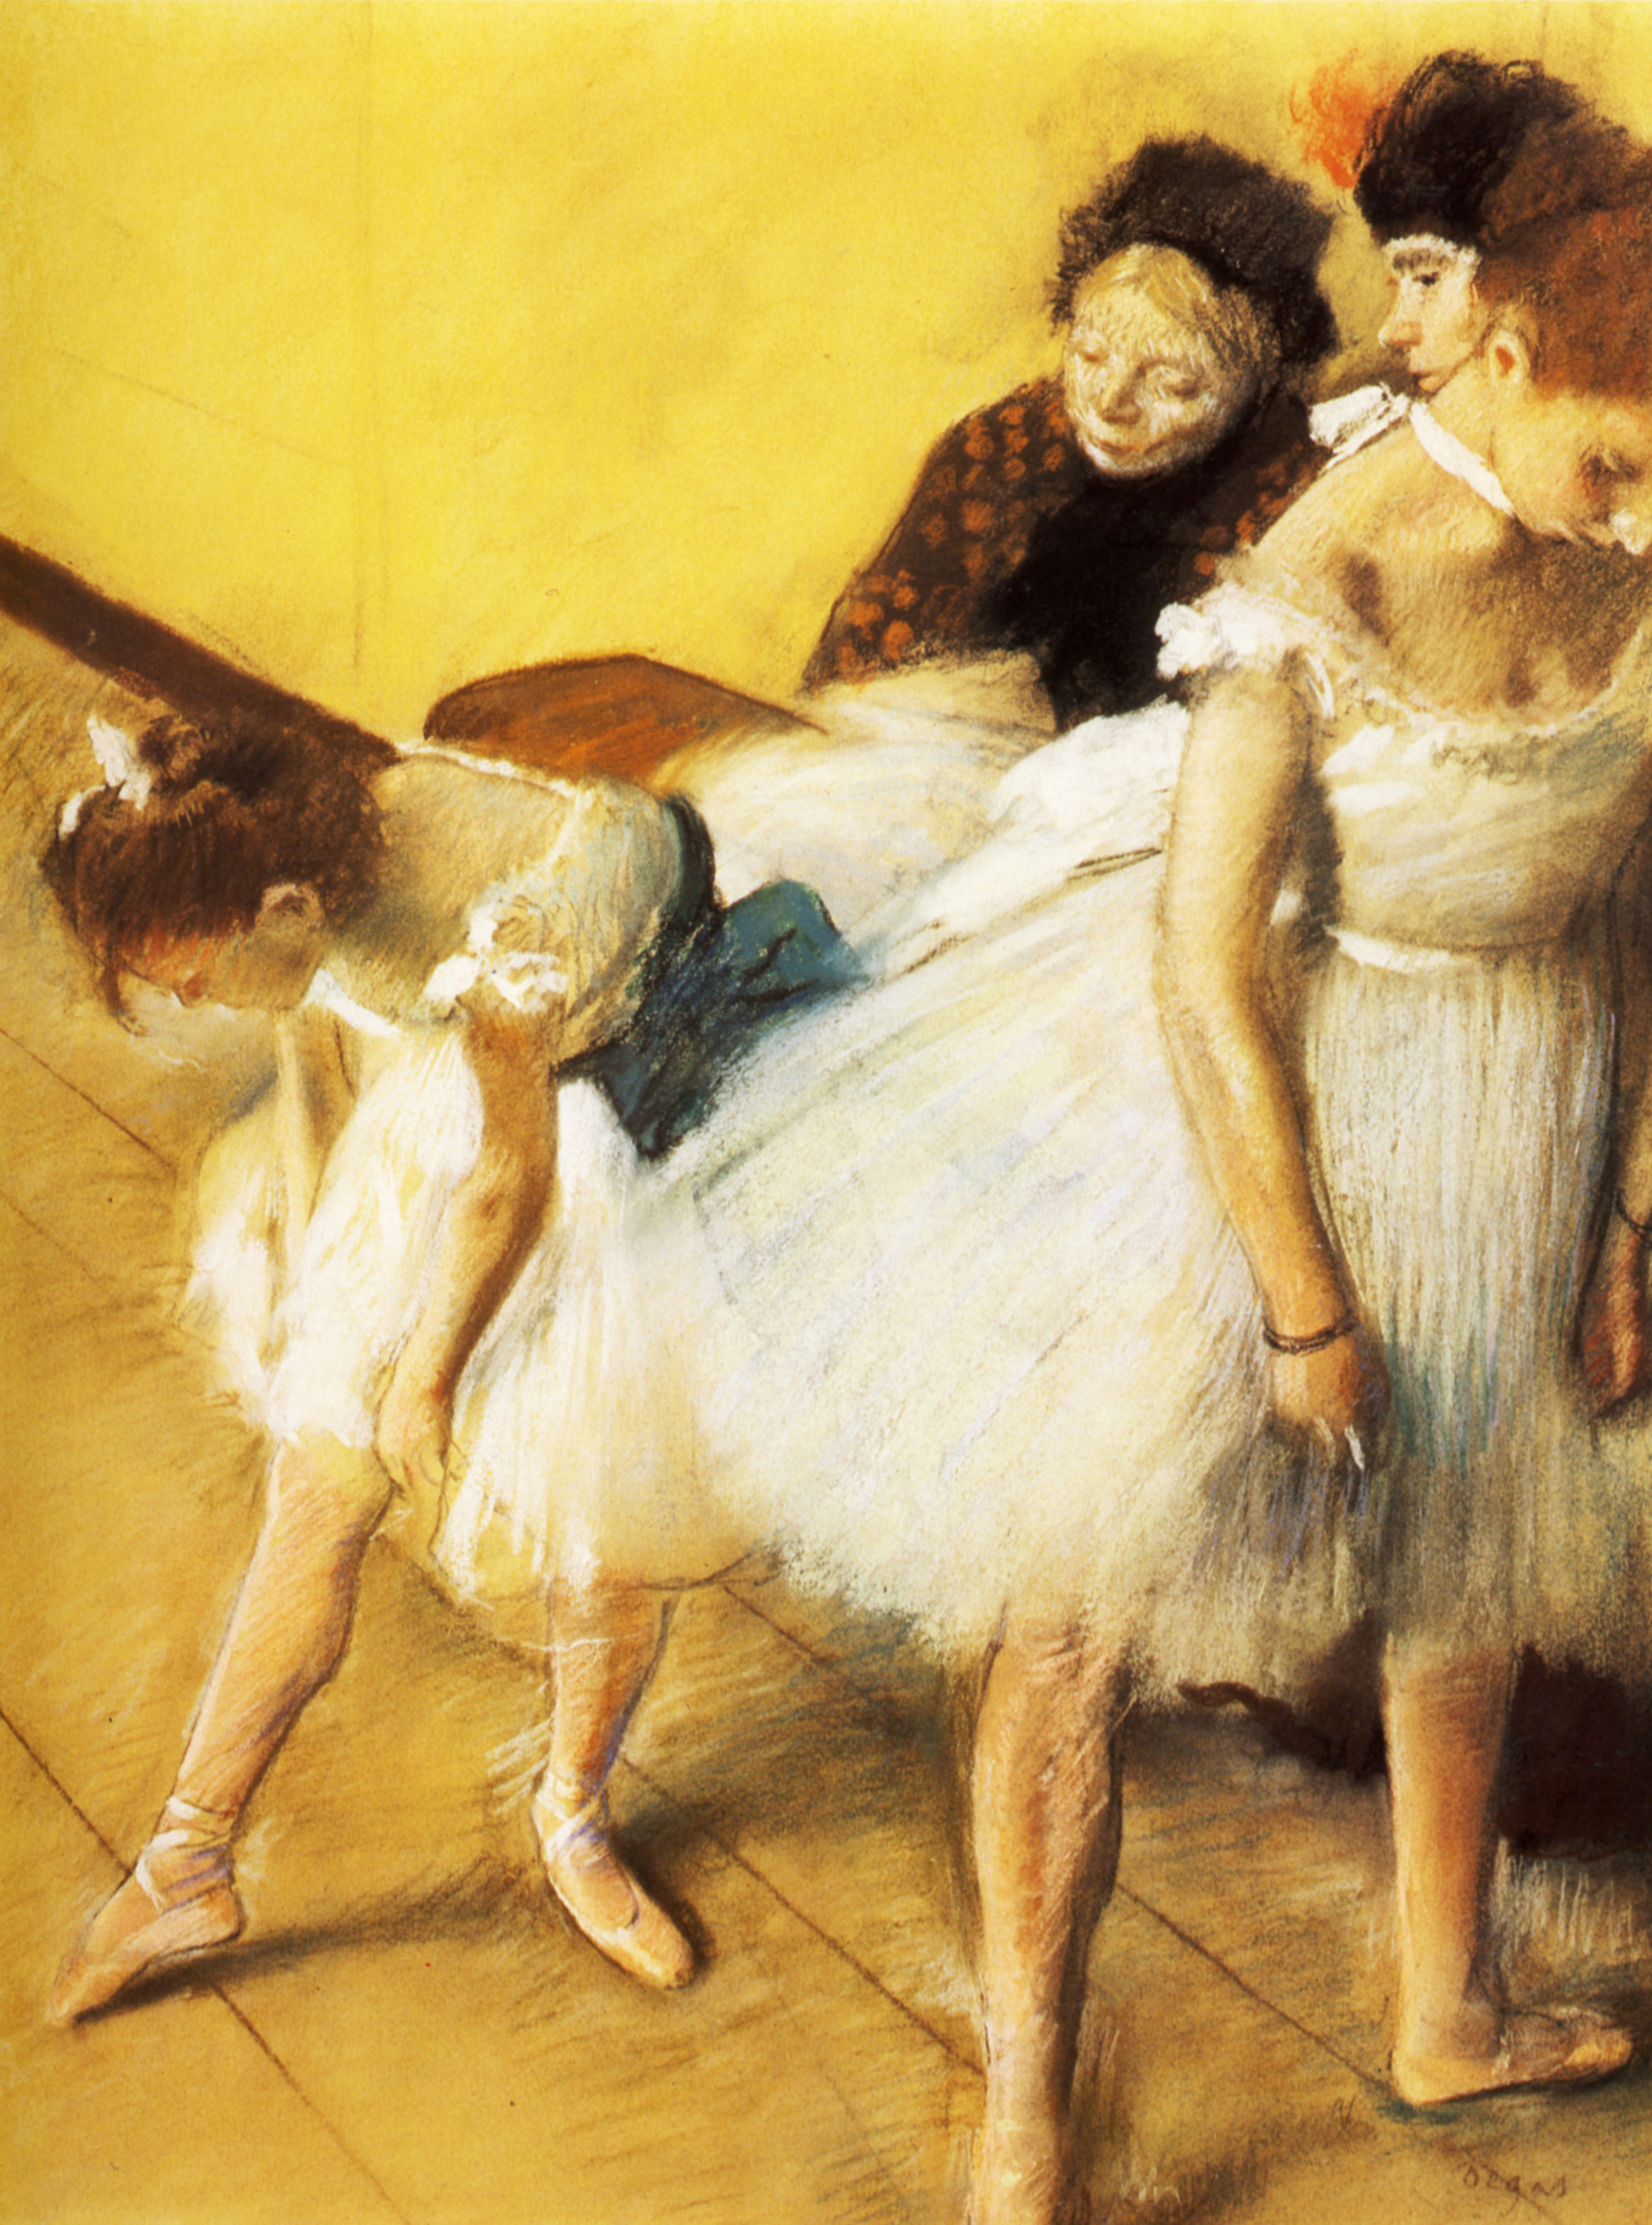 Die Tanzprüfung by Edgar Degas - 1880 - 63,4 x 48,2 cm Denver Art Museum